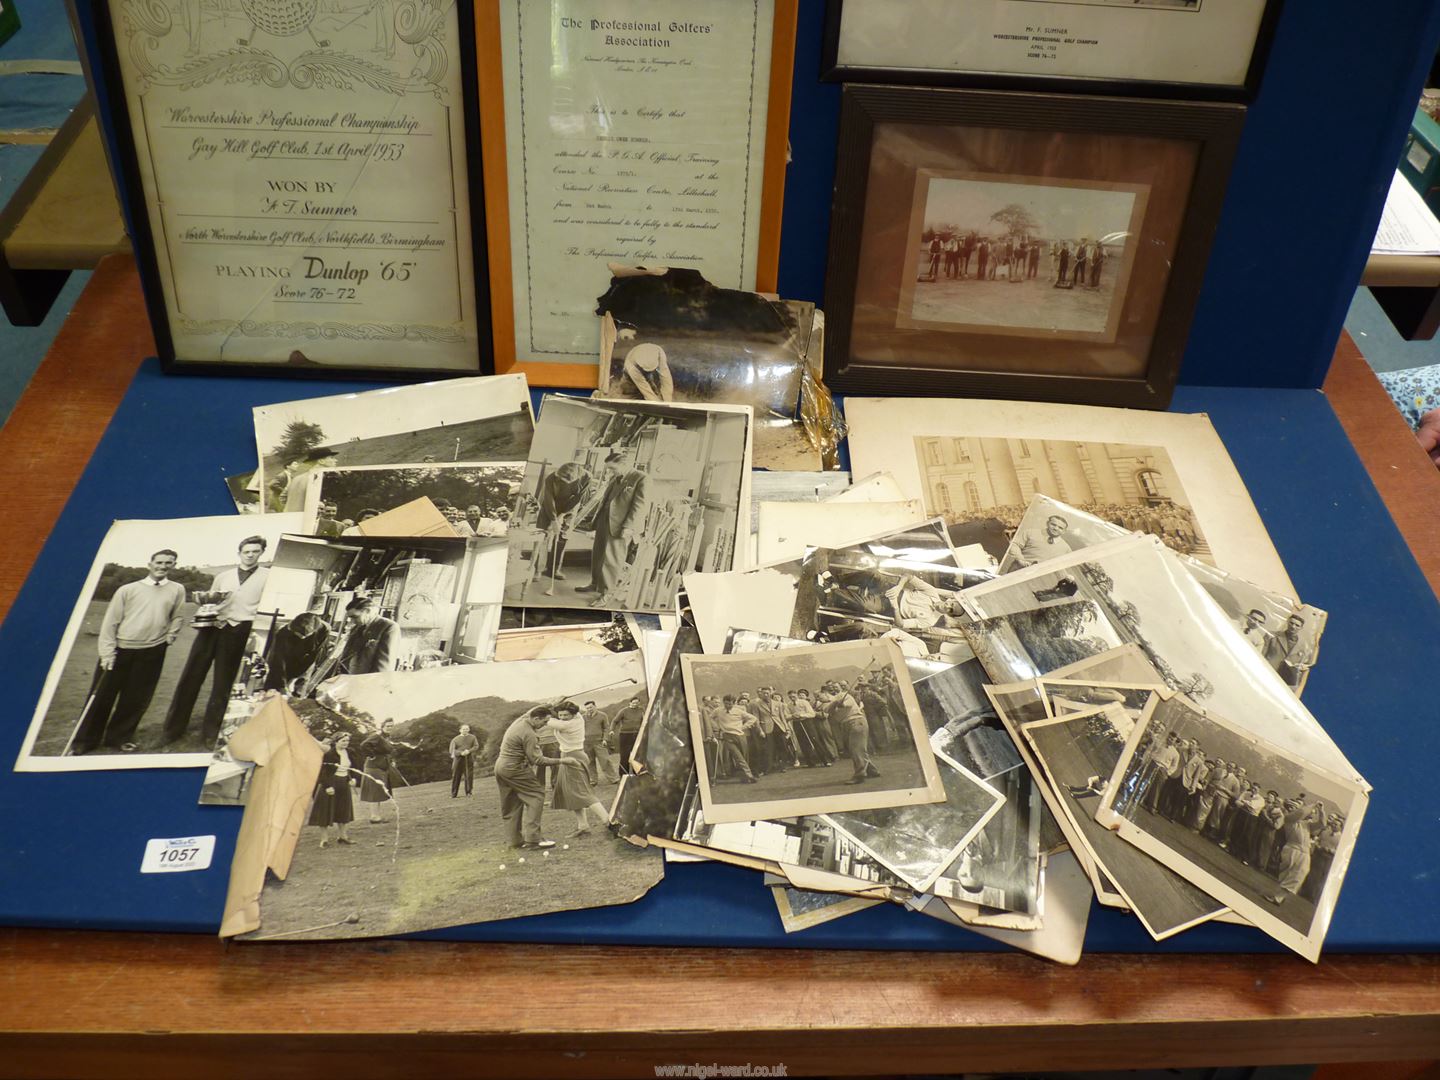 A quantity of Golfing memorabilia to include photographs, - Image 2 of 3